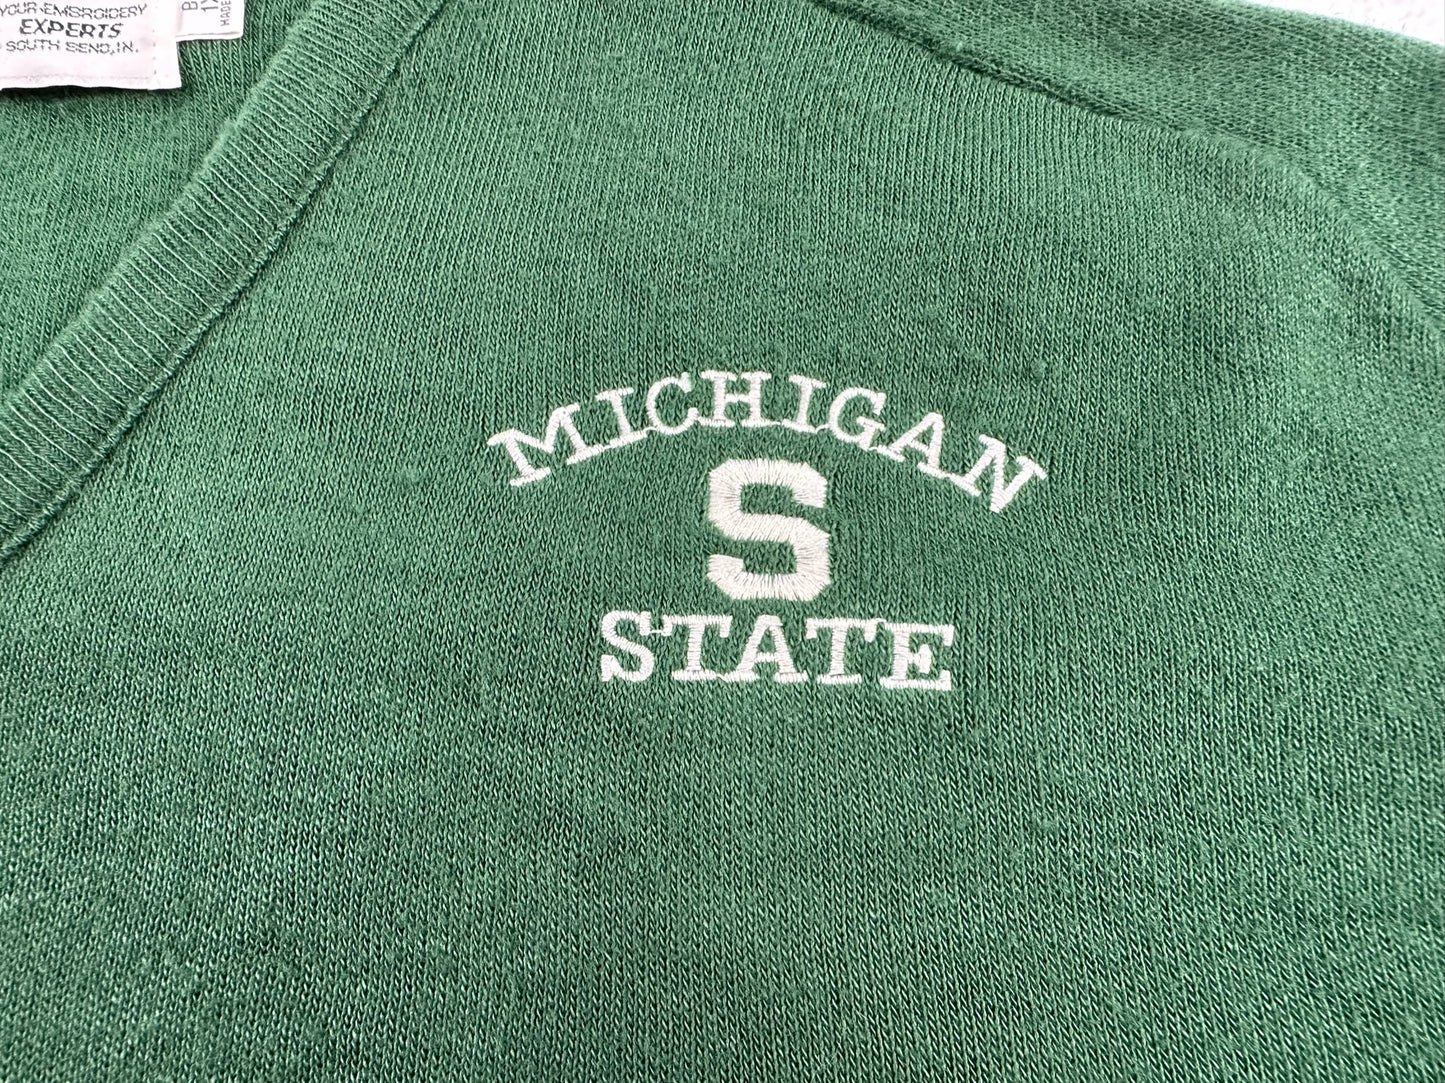 Michigan State Sweater